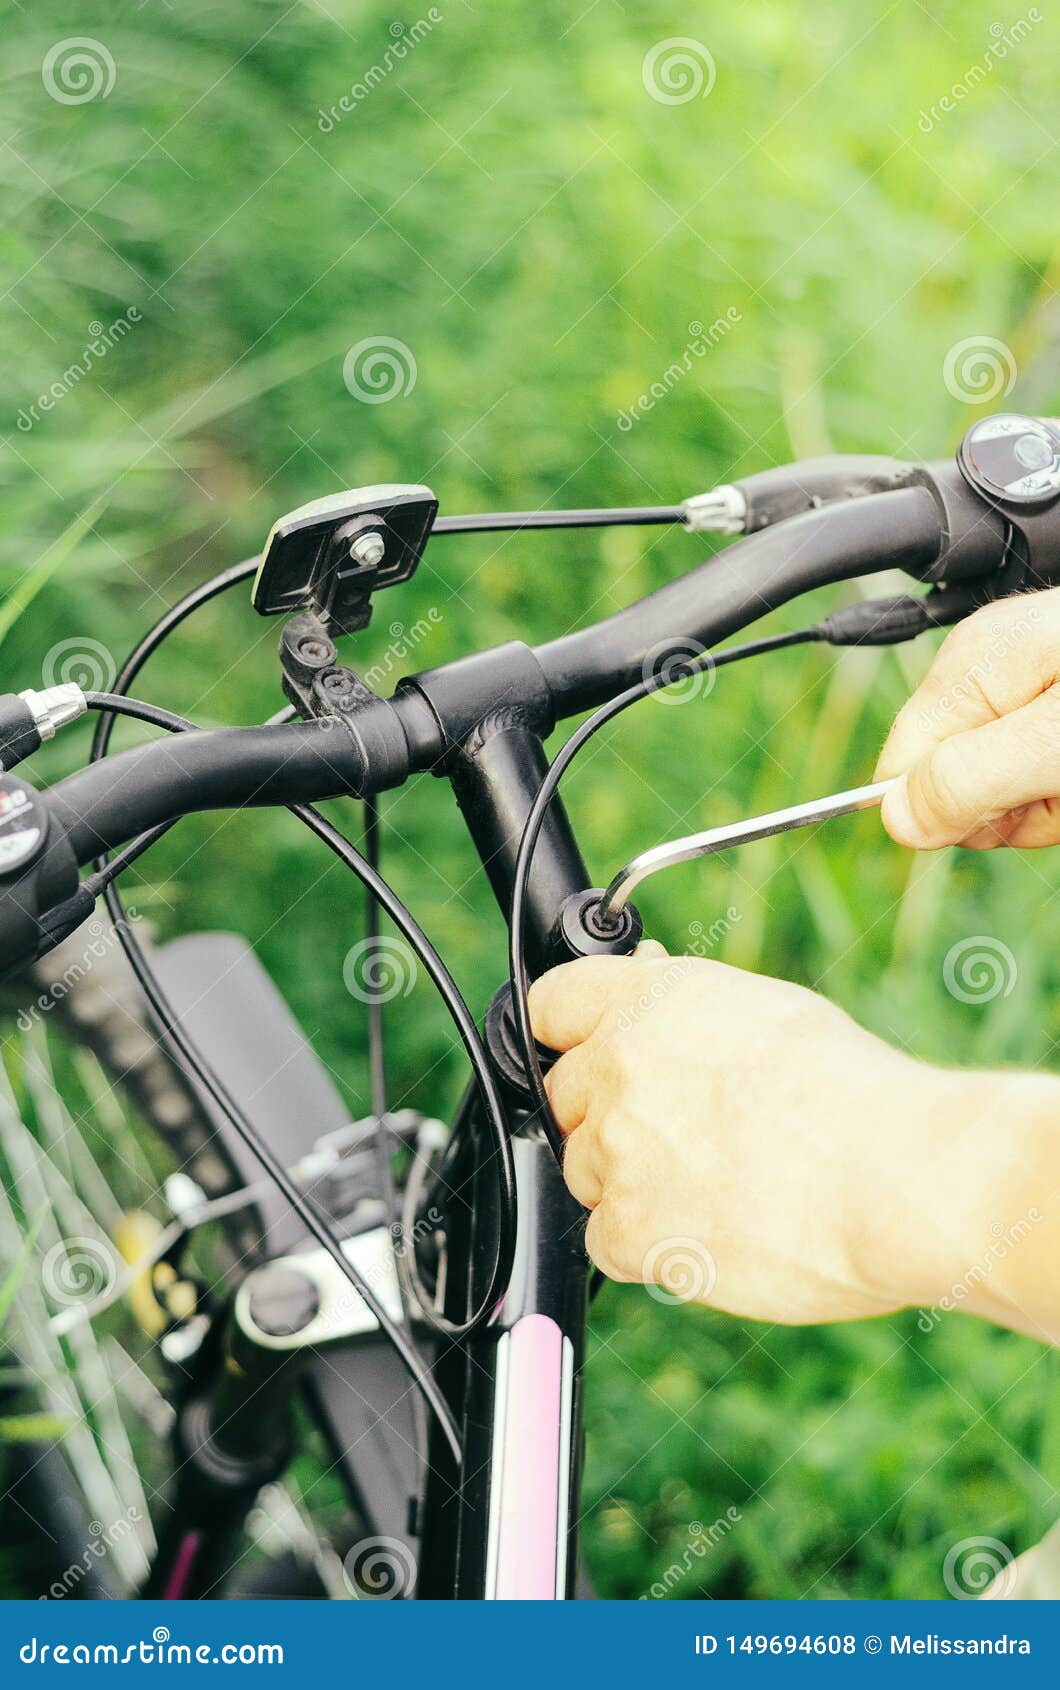 bike hex wrench